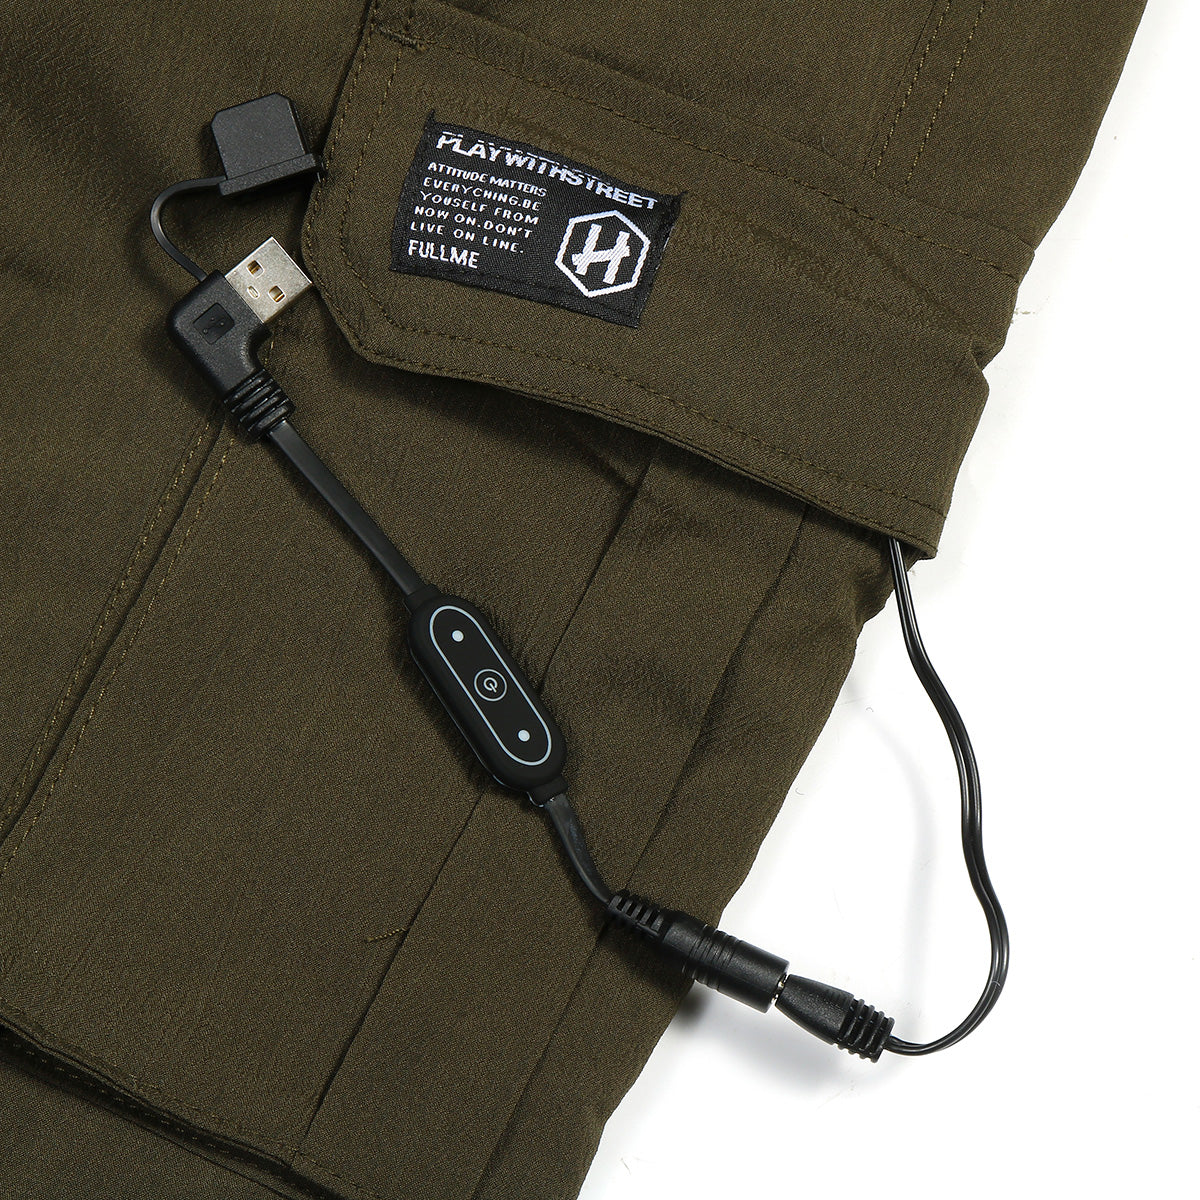 Dark Slate Gray Electric USB Intelligent Heated Warm Casual Pants Men Heating Trousers 3 Adjustable Temperature